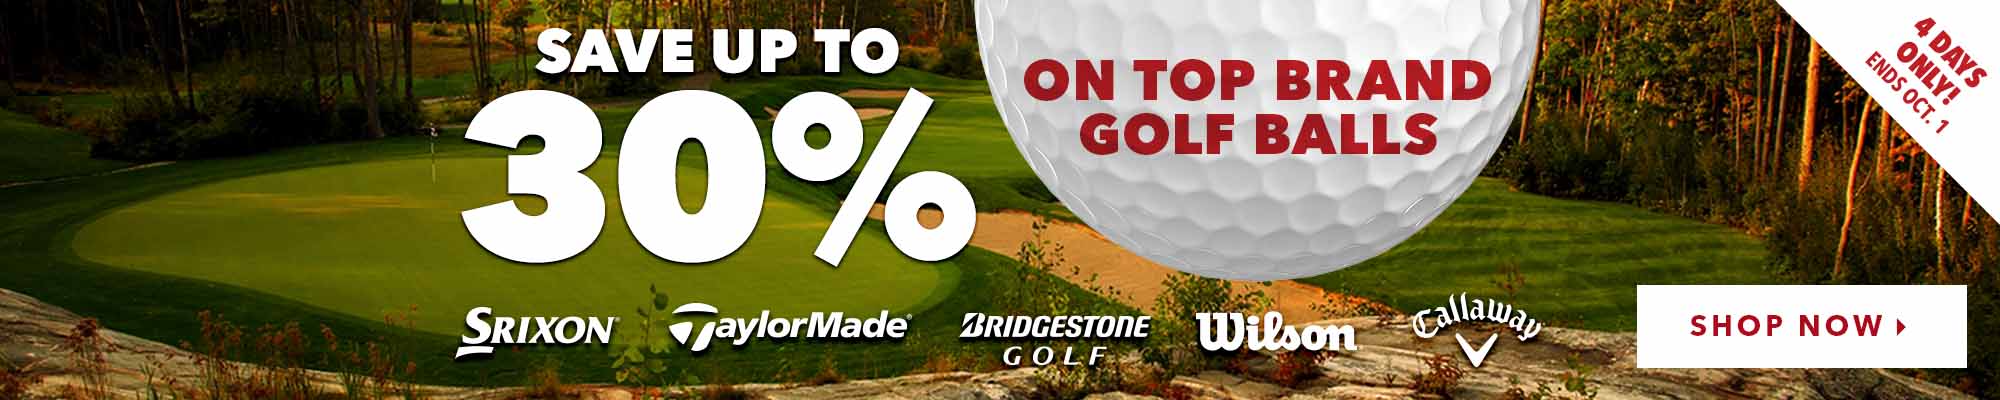 Extend Your Season Sale - Save on Top Brand Golf Balls